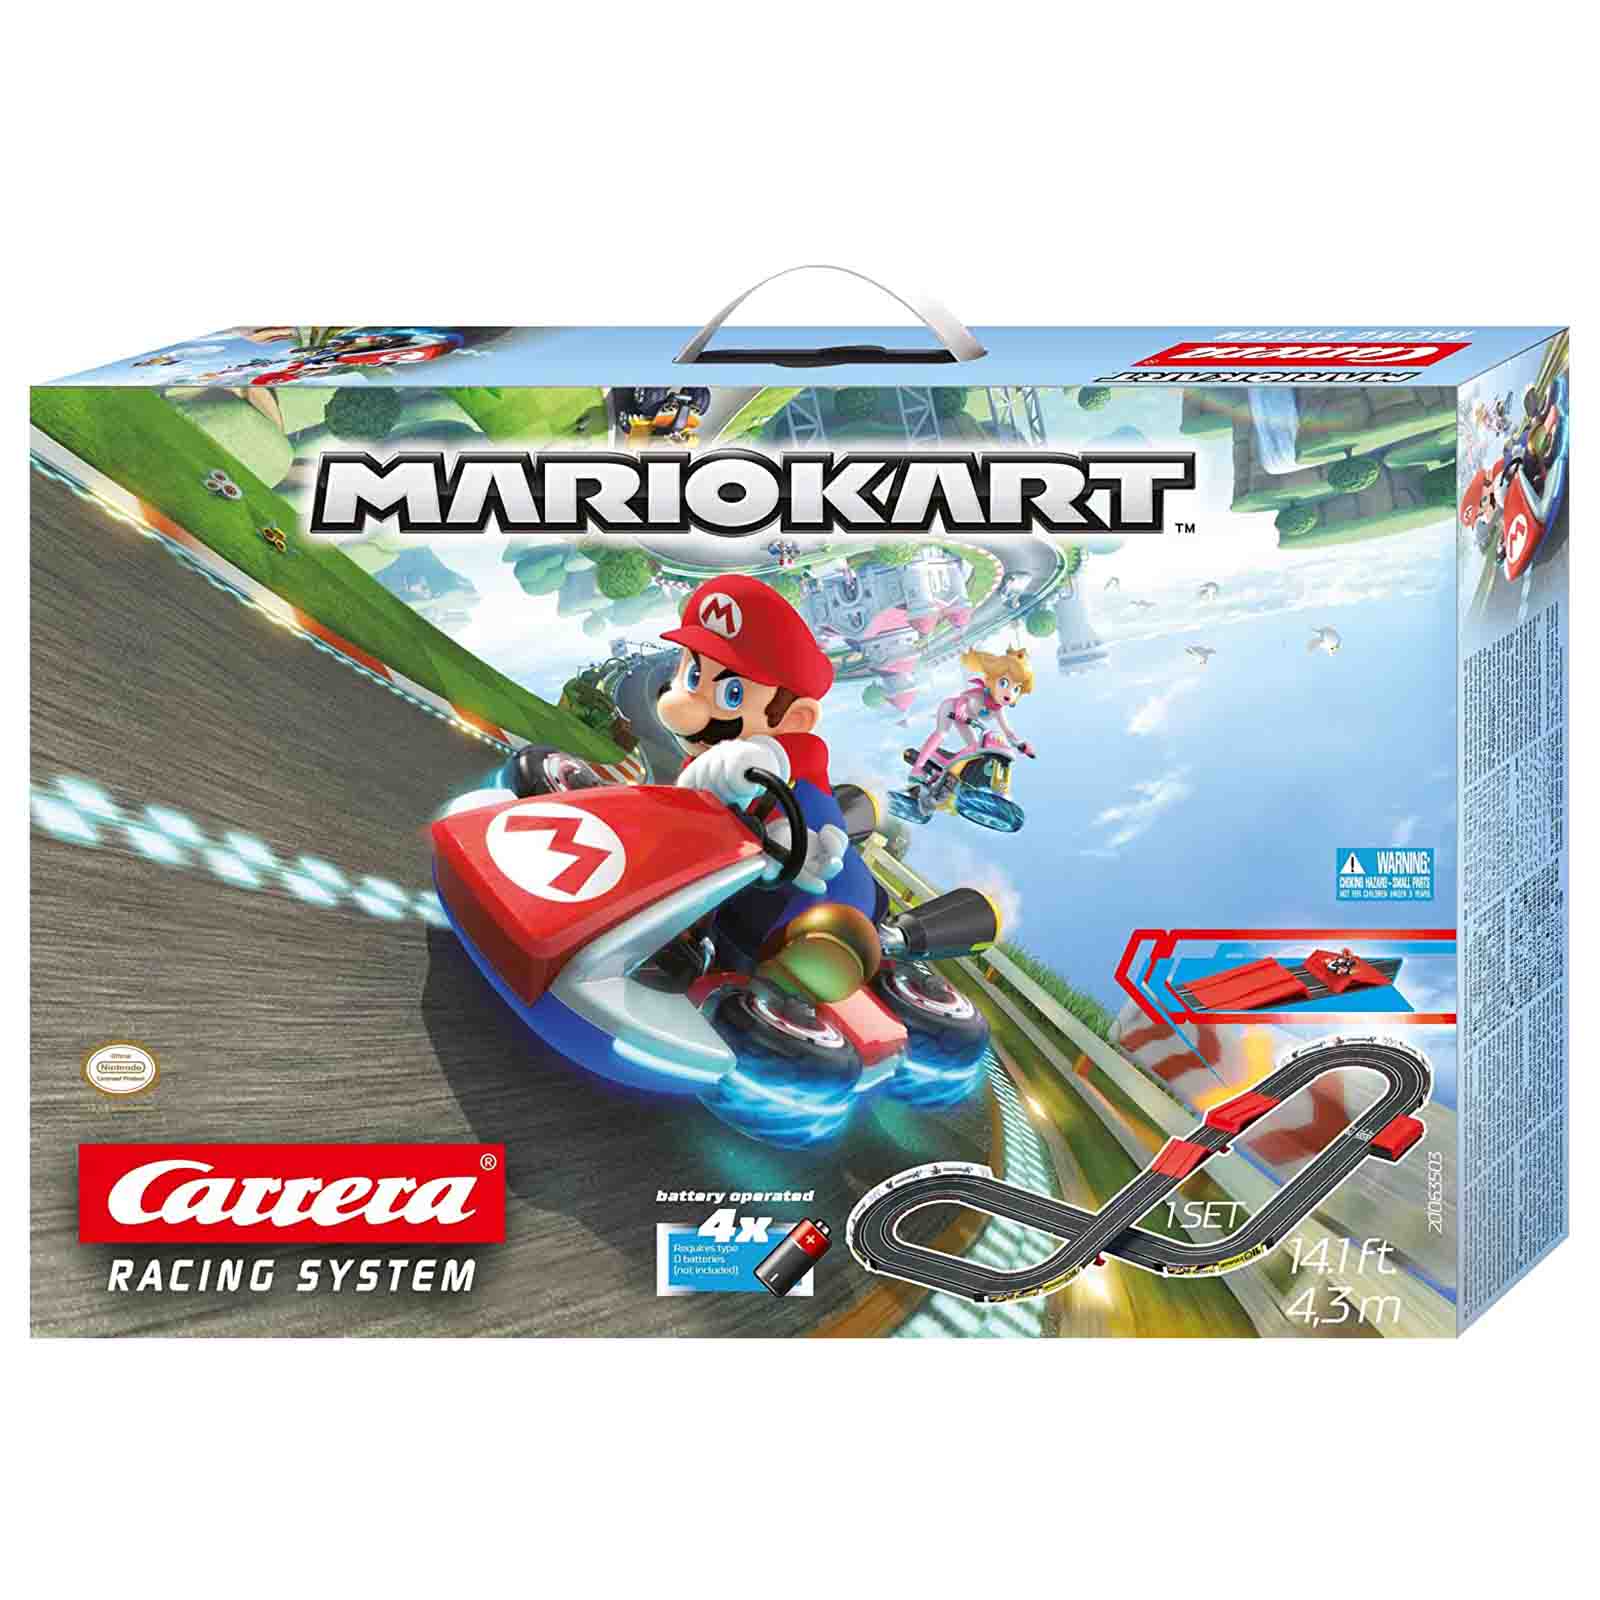 Photo 1 of Carrera Mario Kart 8 Racing Track Set
MINOR DAMAGE TO TRACK//SEE PHOTO//